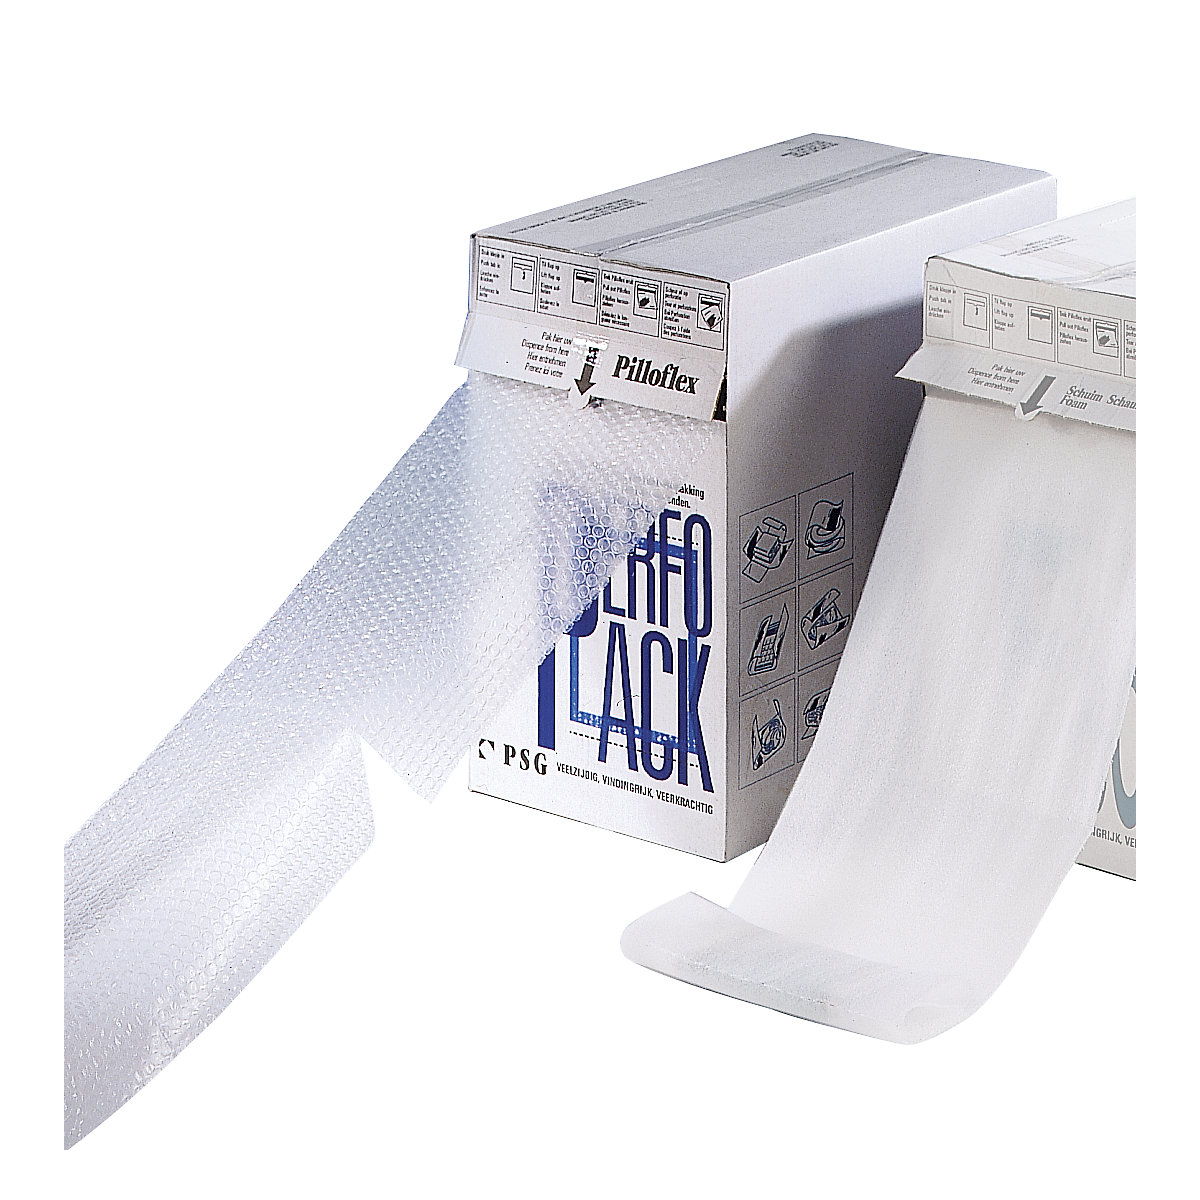 Lámina de embalaje en caja dispensadora de cartón